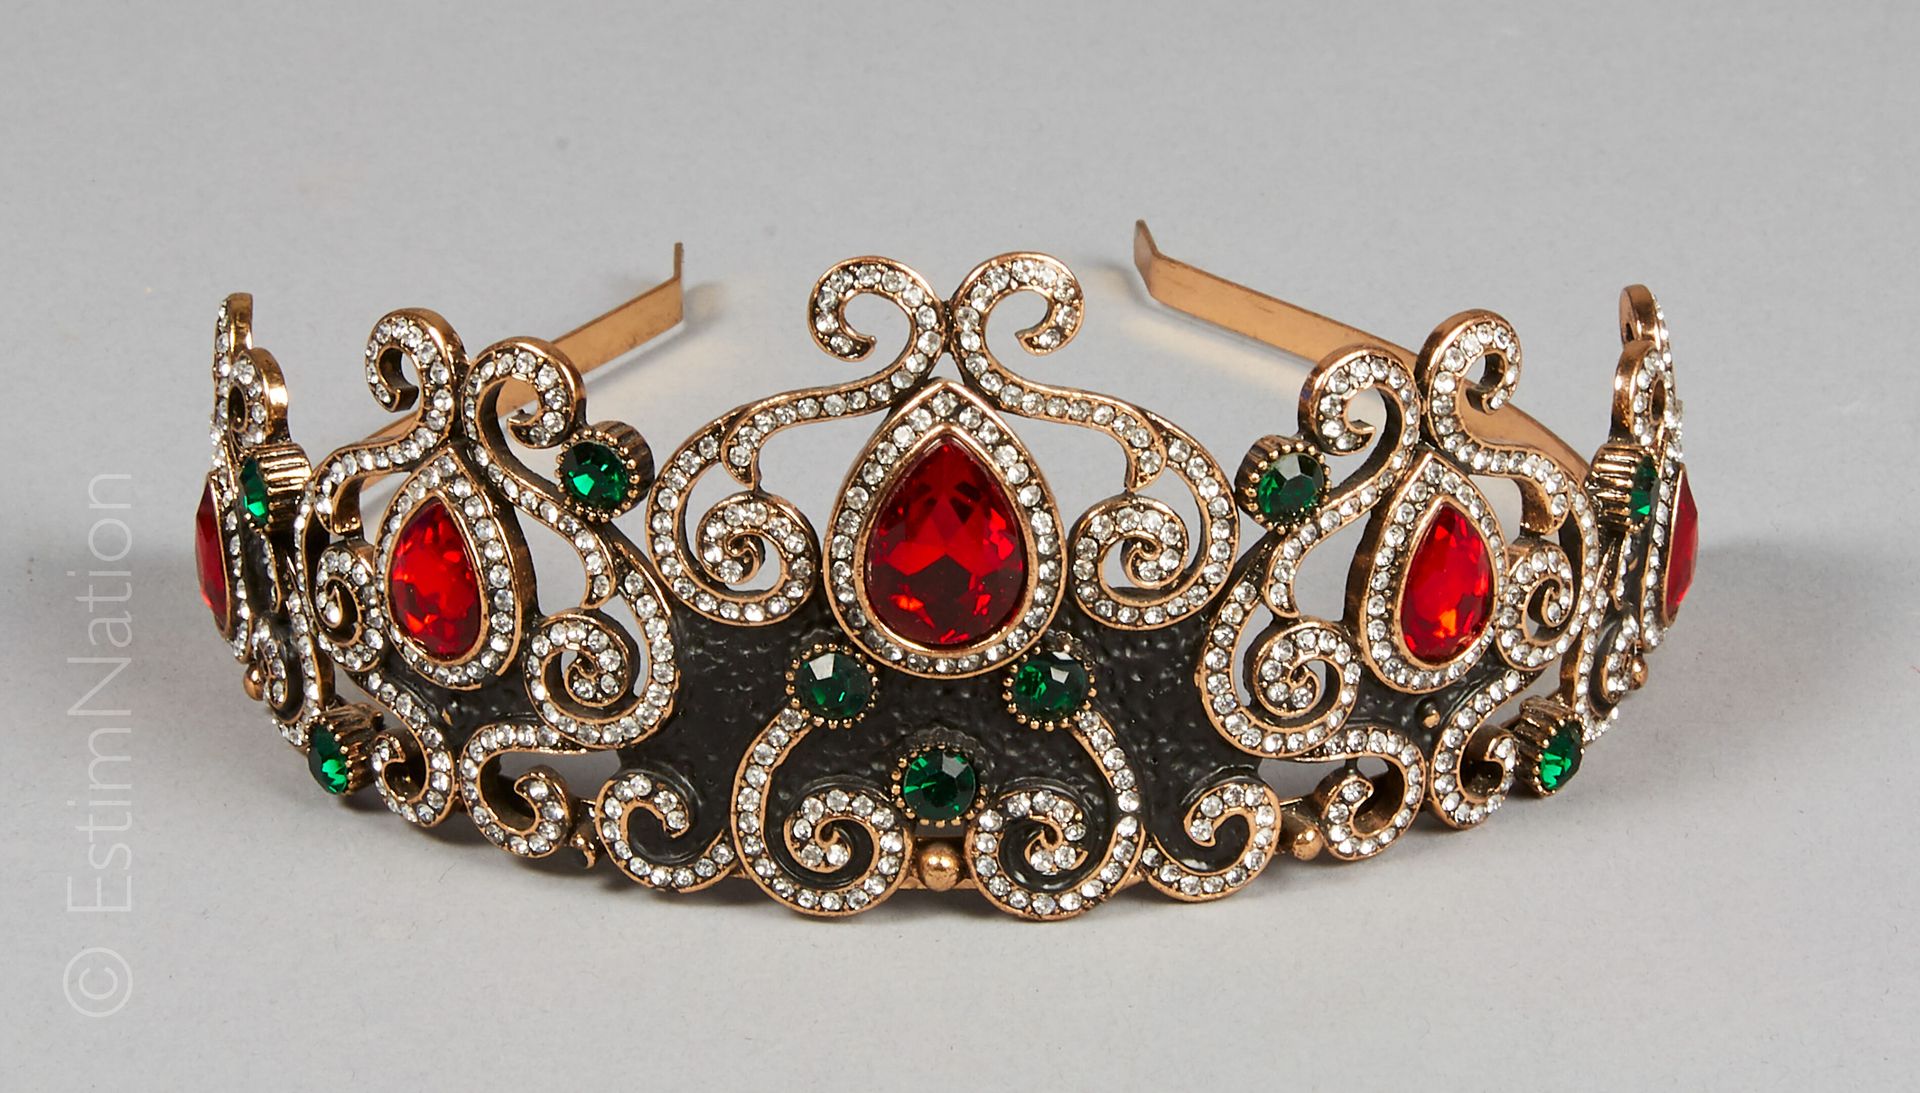 COURONNE D'APPARAT FANTAISIE 青铜和锤击的金属皇冠上有花色的宝石。在高级珠宝的味道中